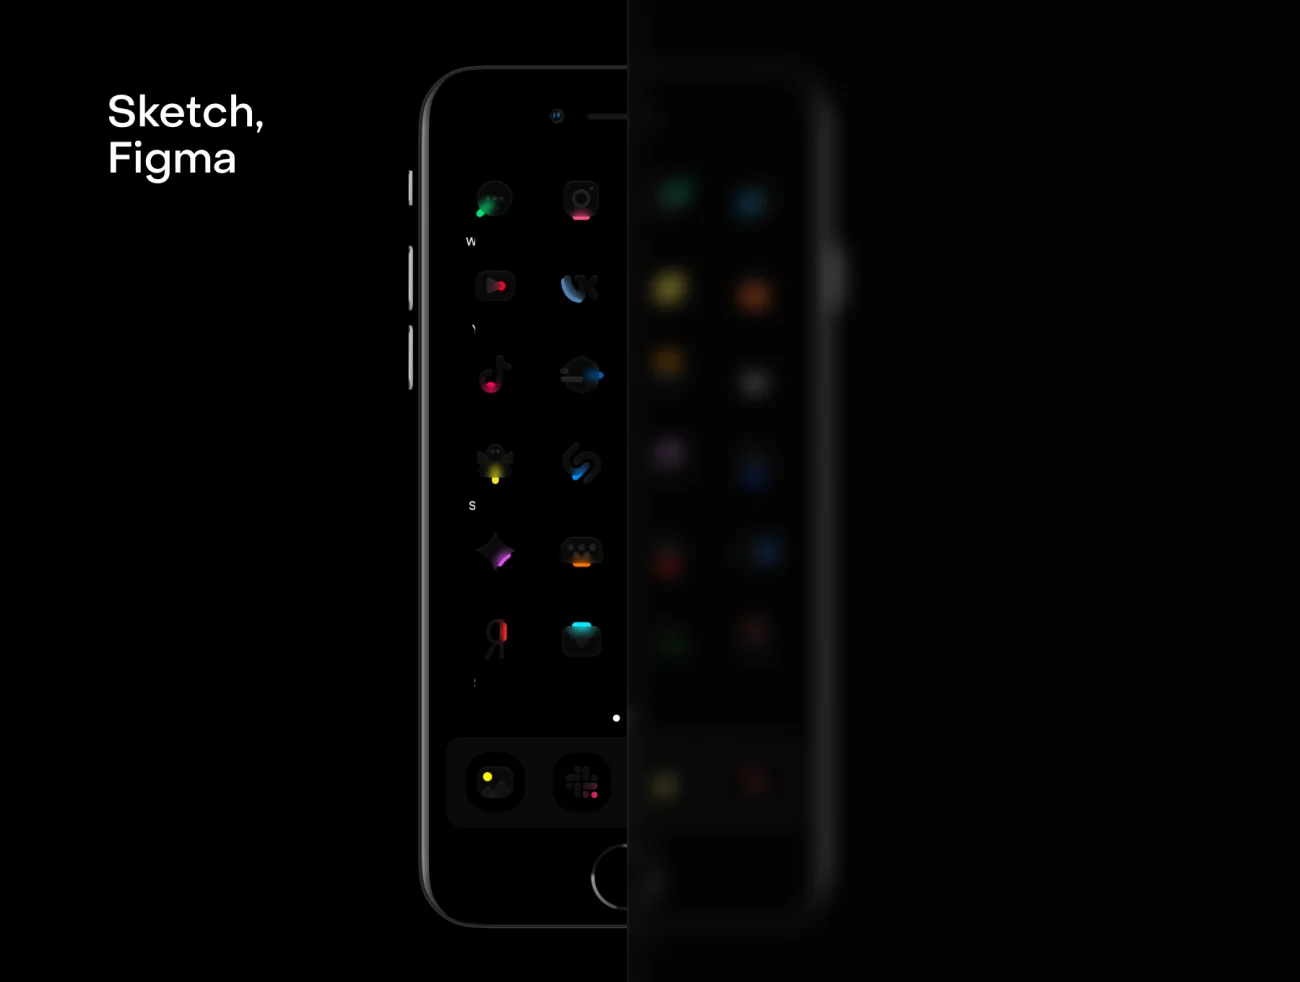 Glossy icons 58款适配iOS14的荧光图标可发光-UI/UX-到位啦UI